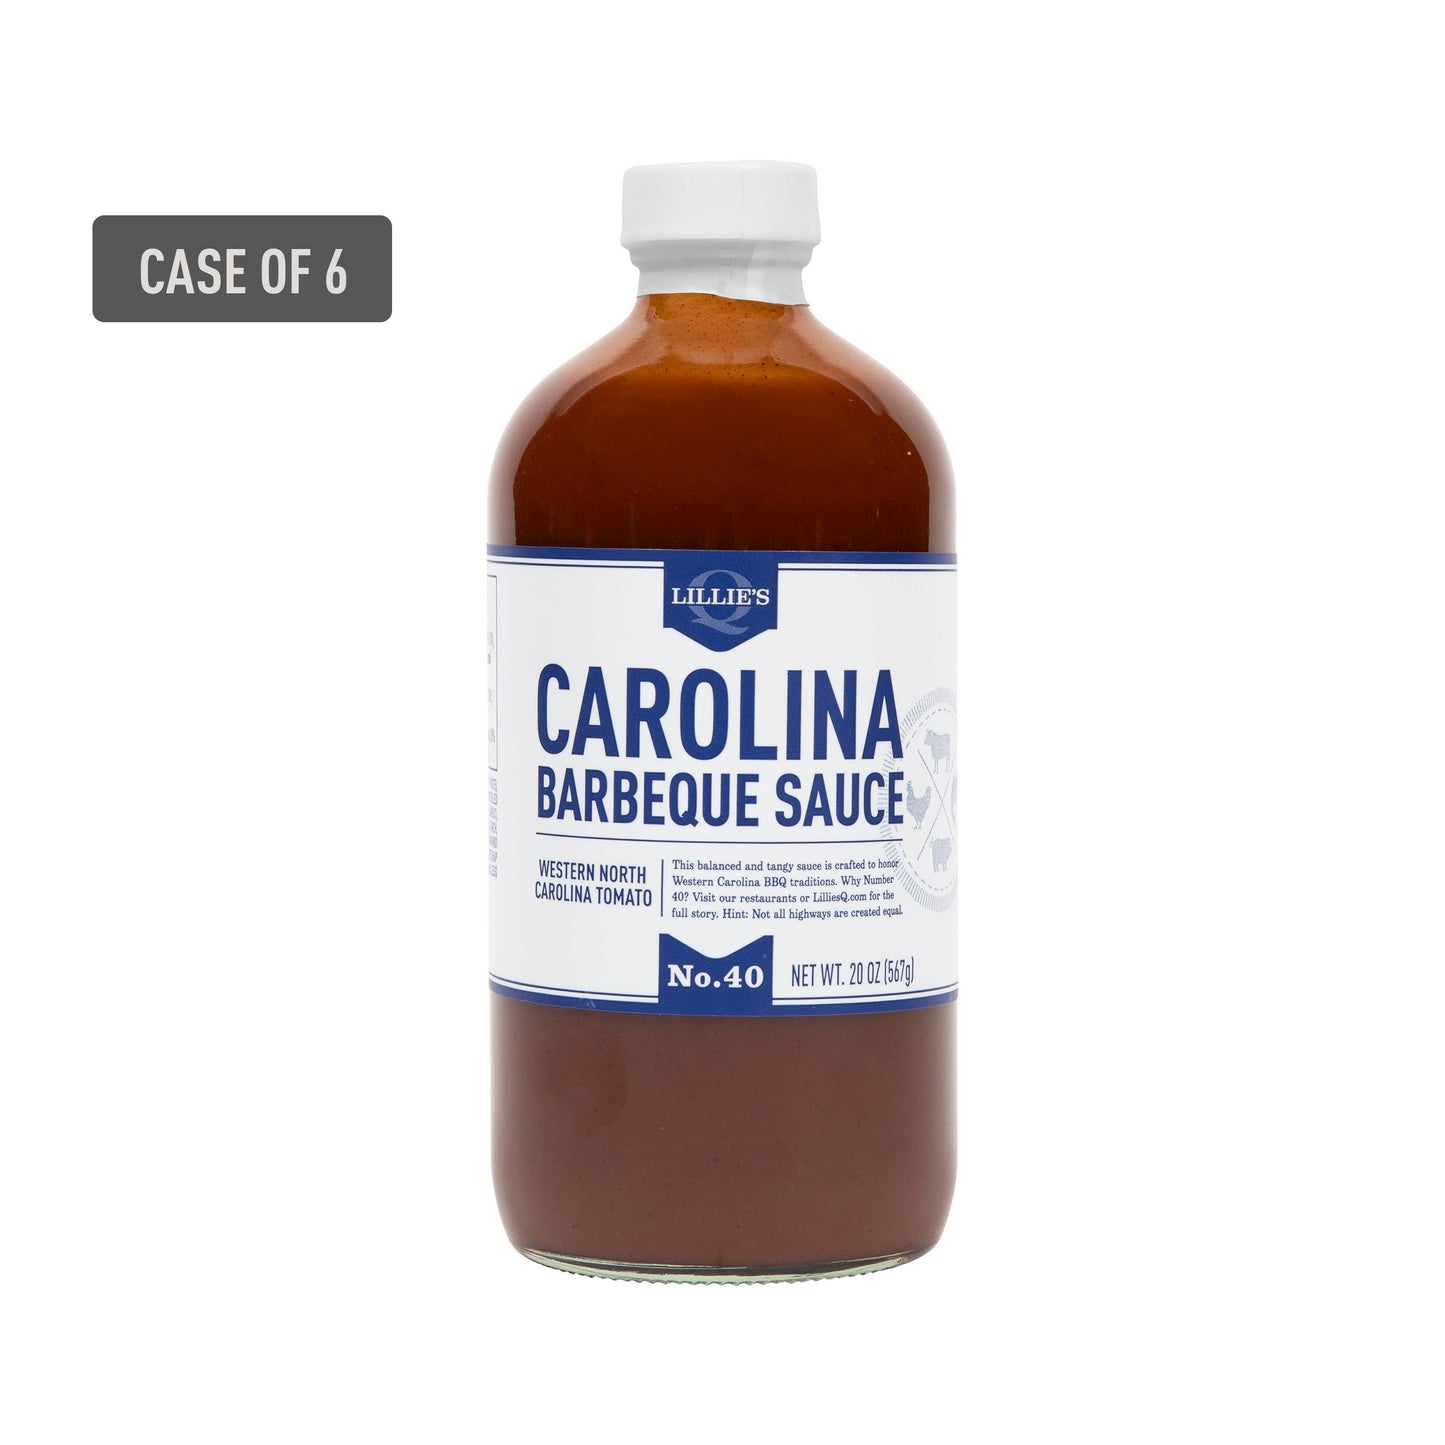 Lillie's Q - Carolina Barbeque Sauce